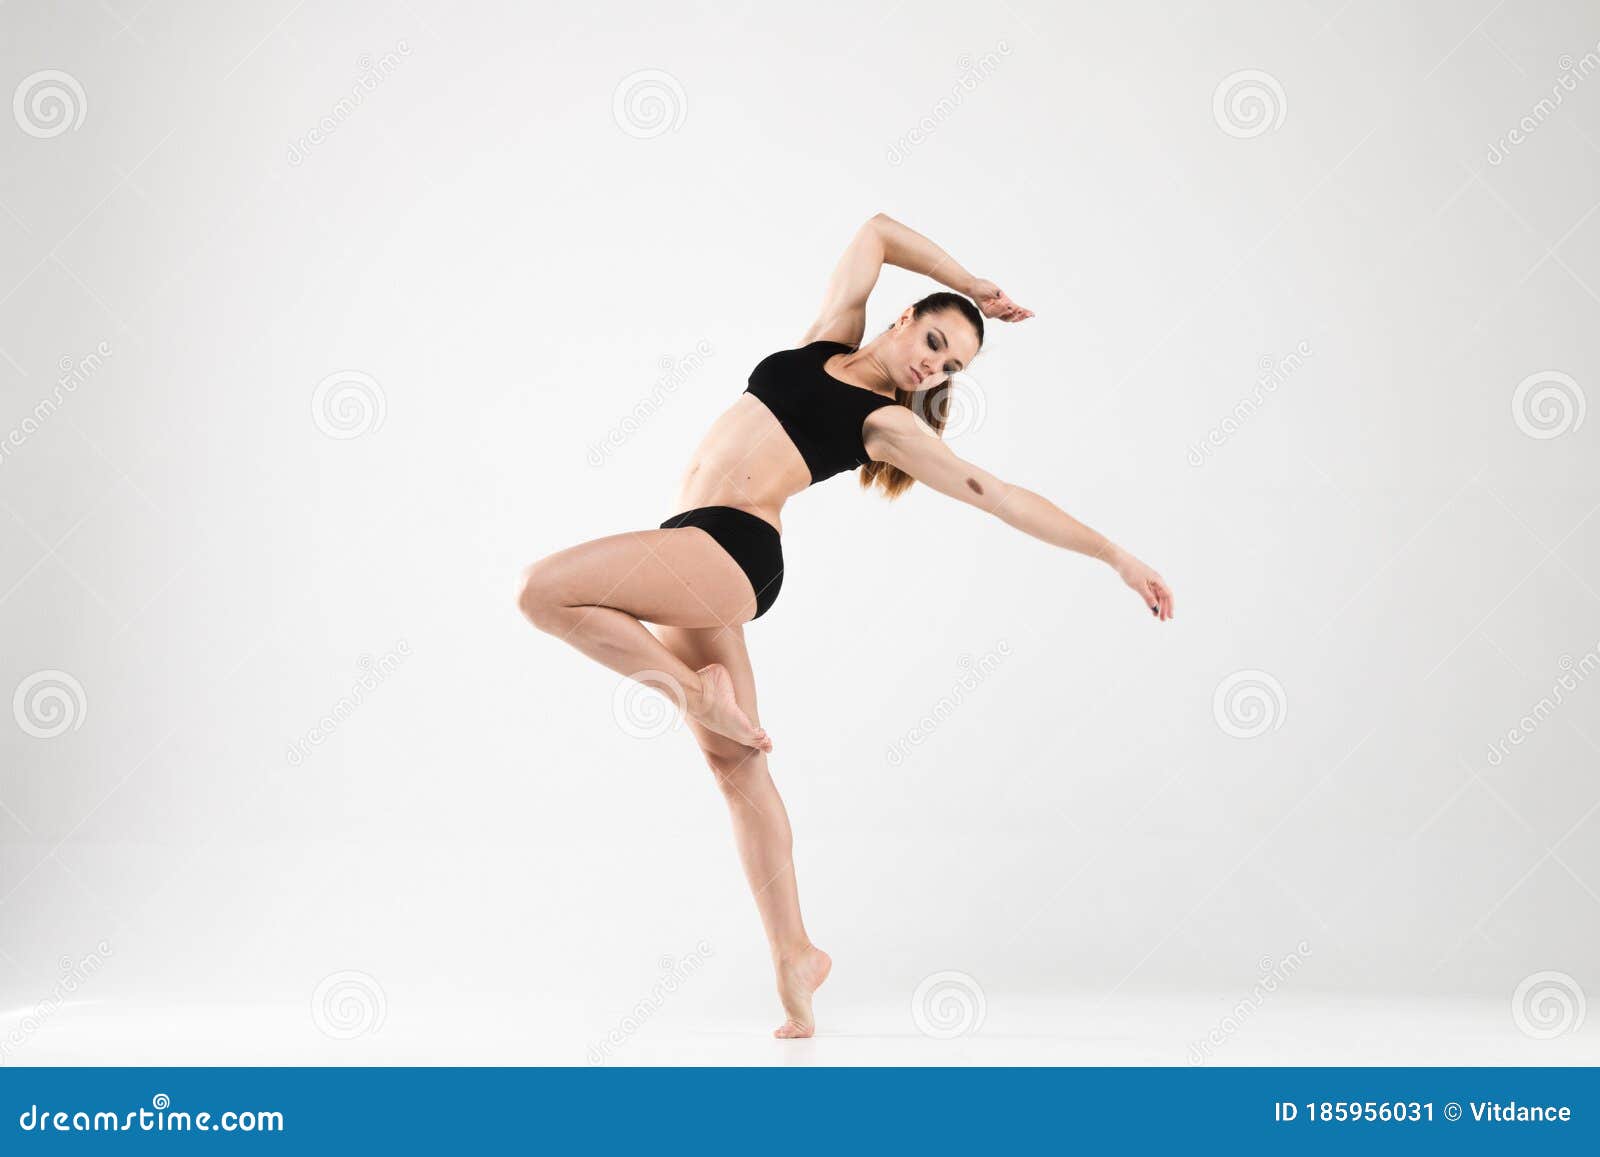 Dancing Pose PNG Transparent Images Free Download | Vector Files | Pngtree